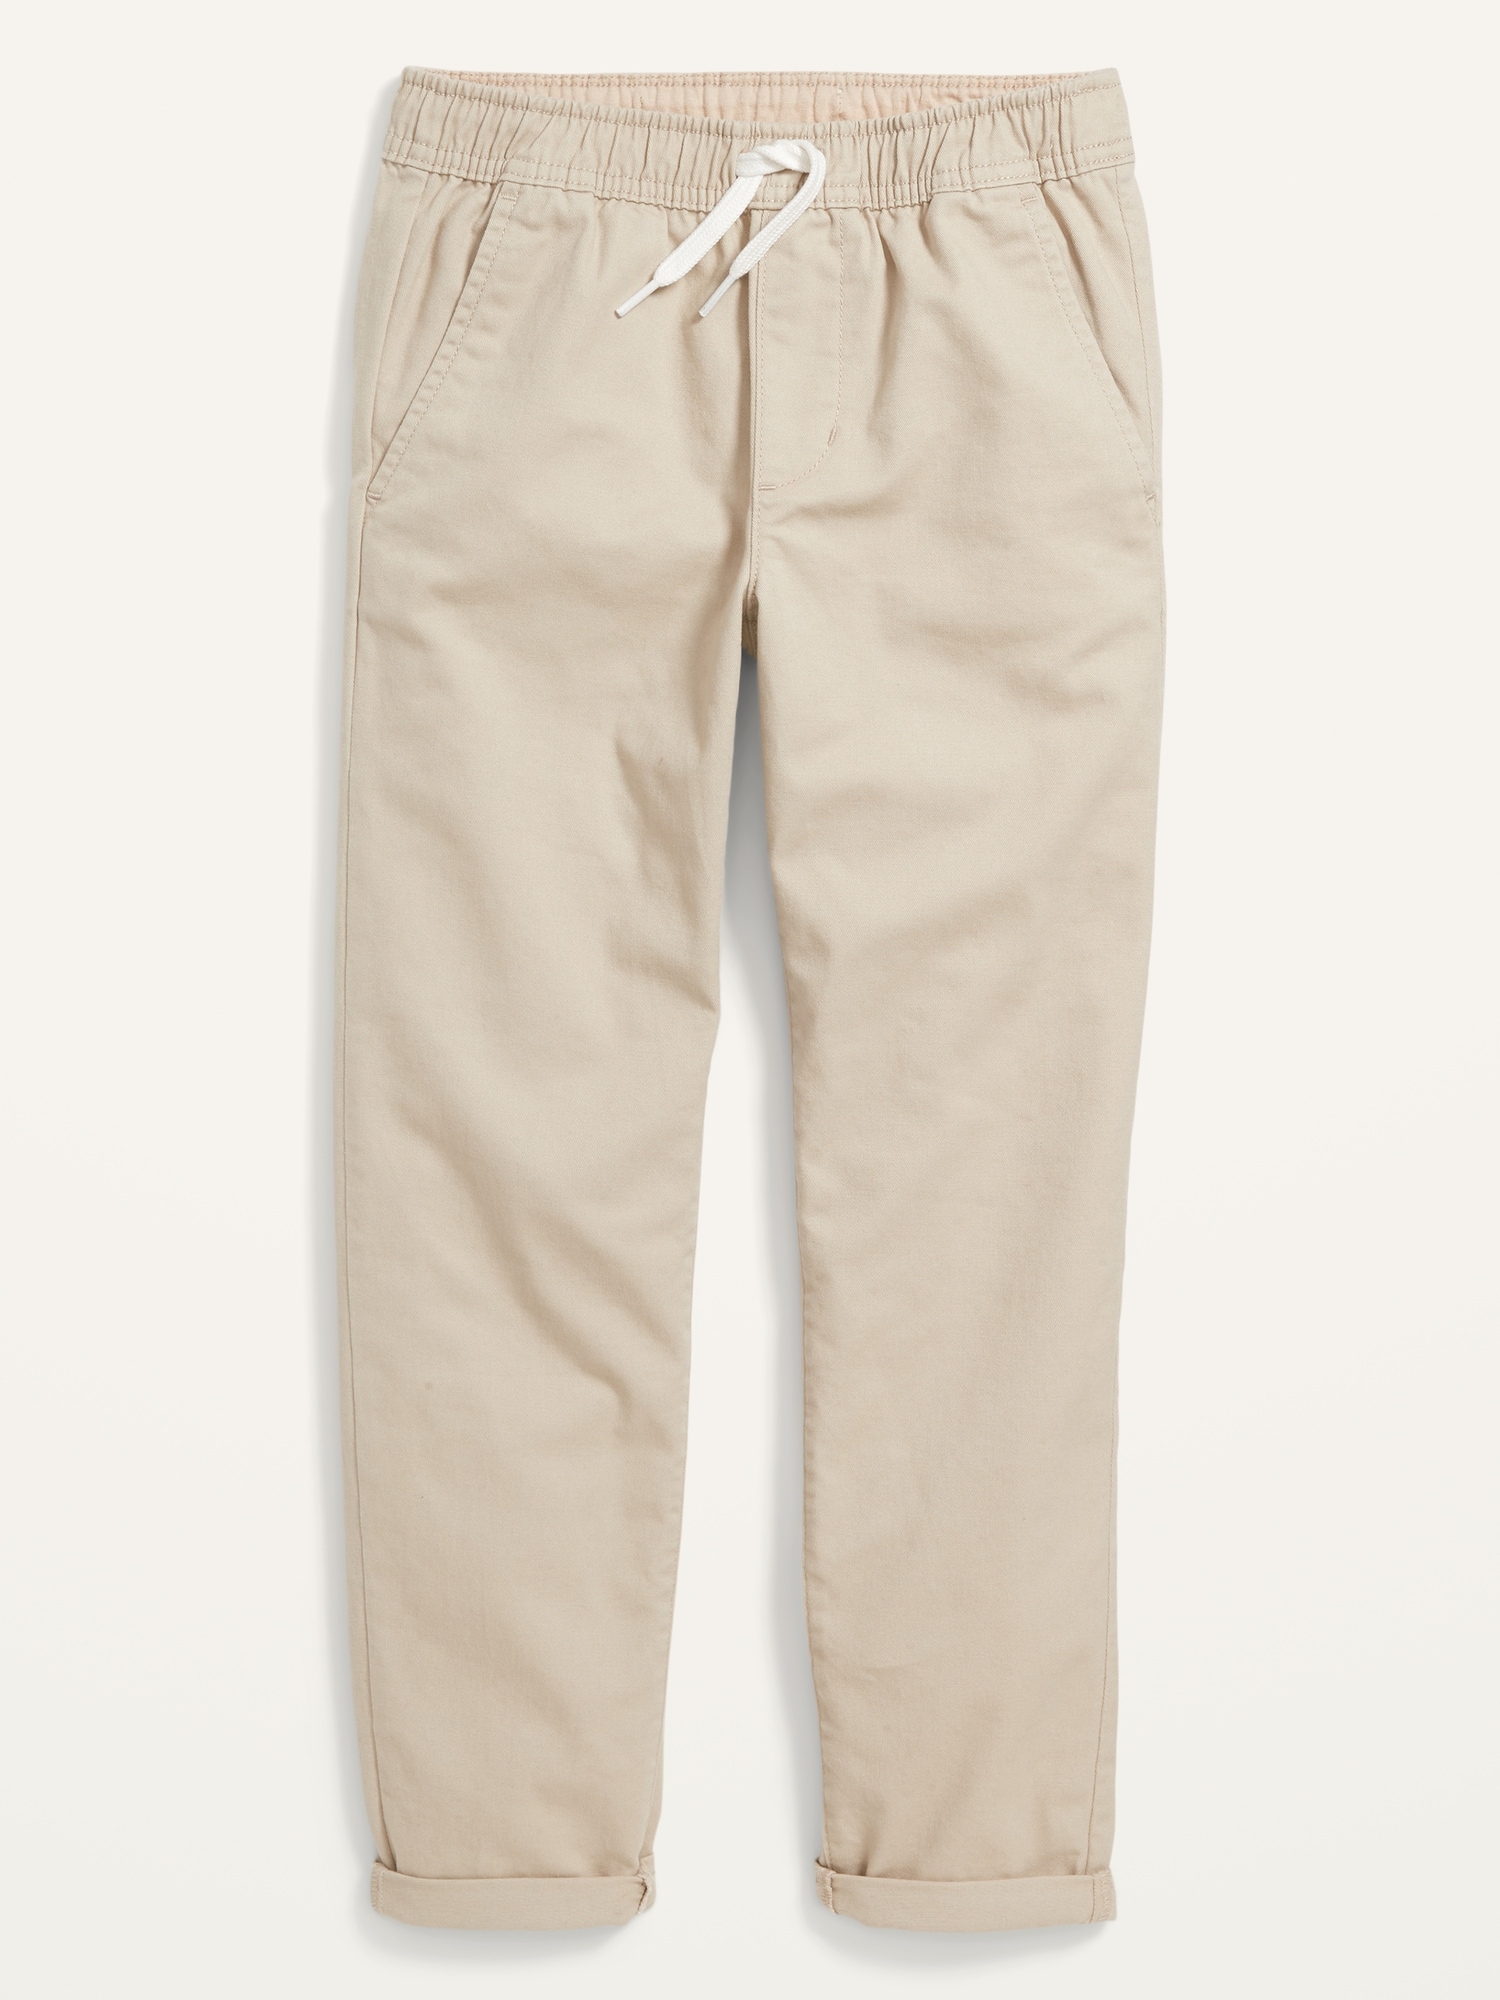 Slim Taper Built-In Flex Pull-On Uniform Pants For Boys | Old Navy